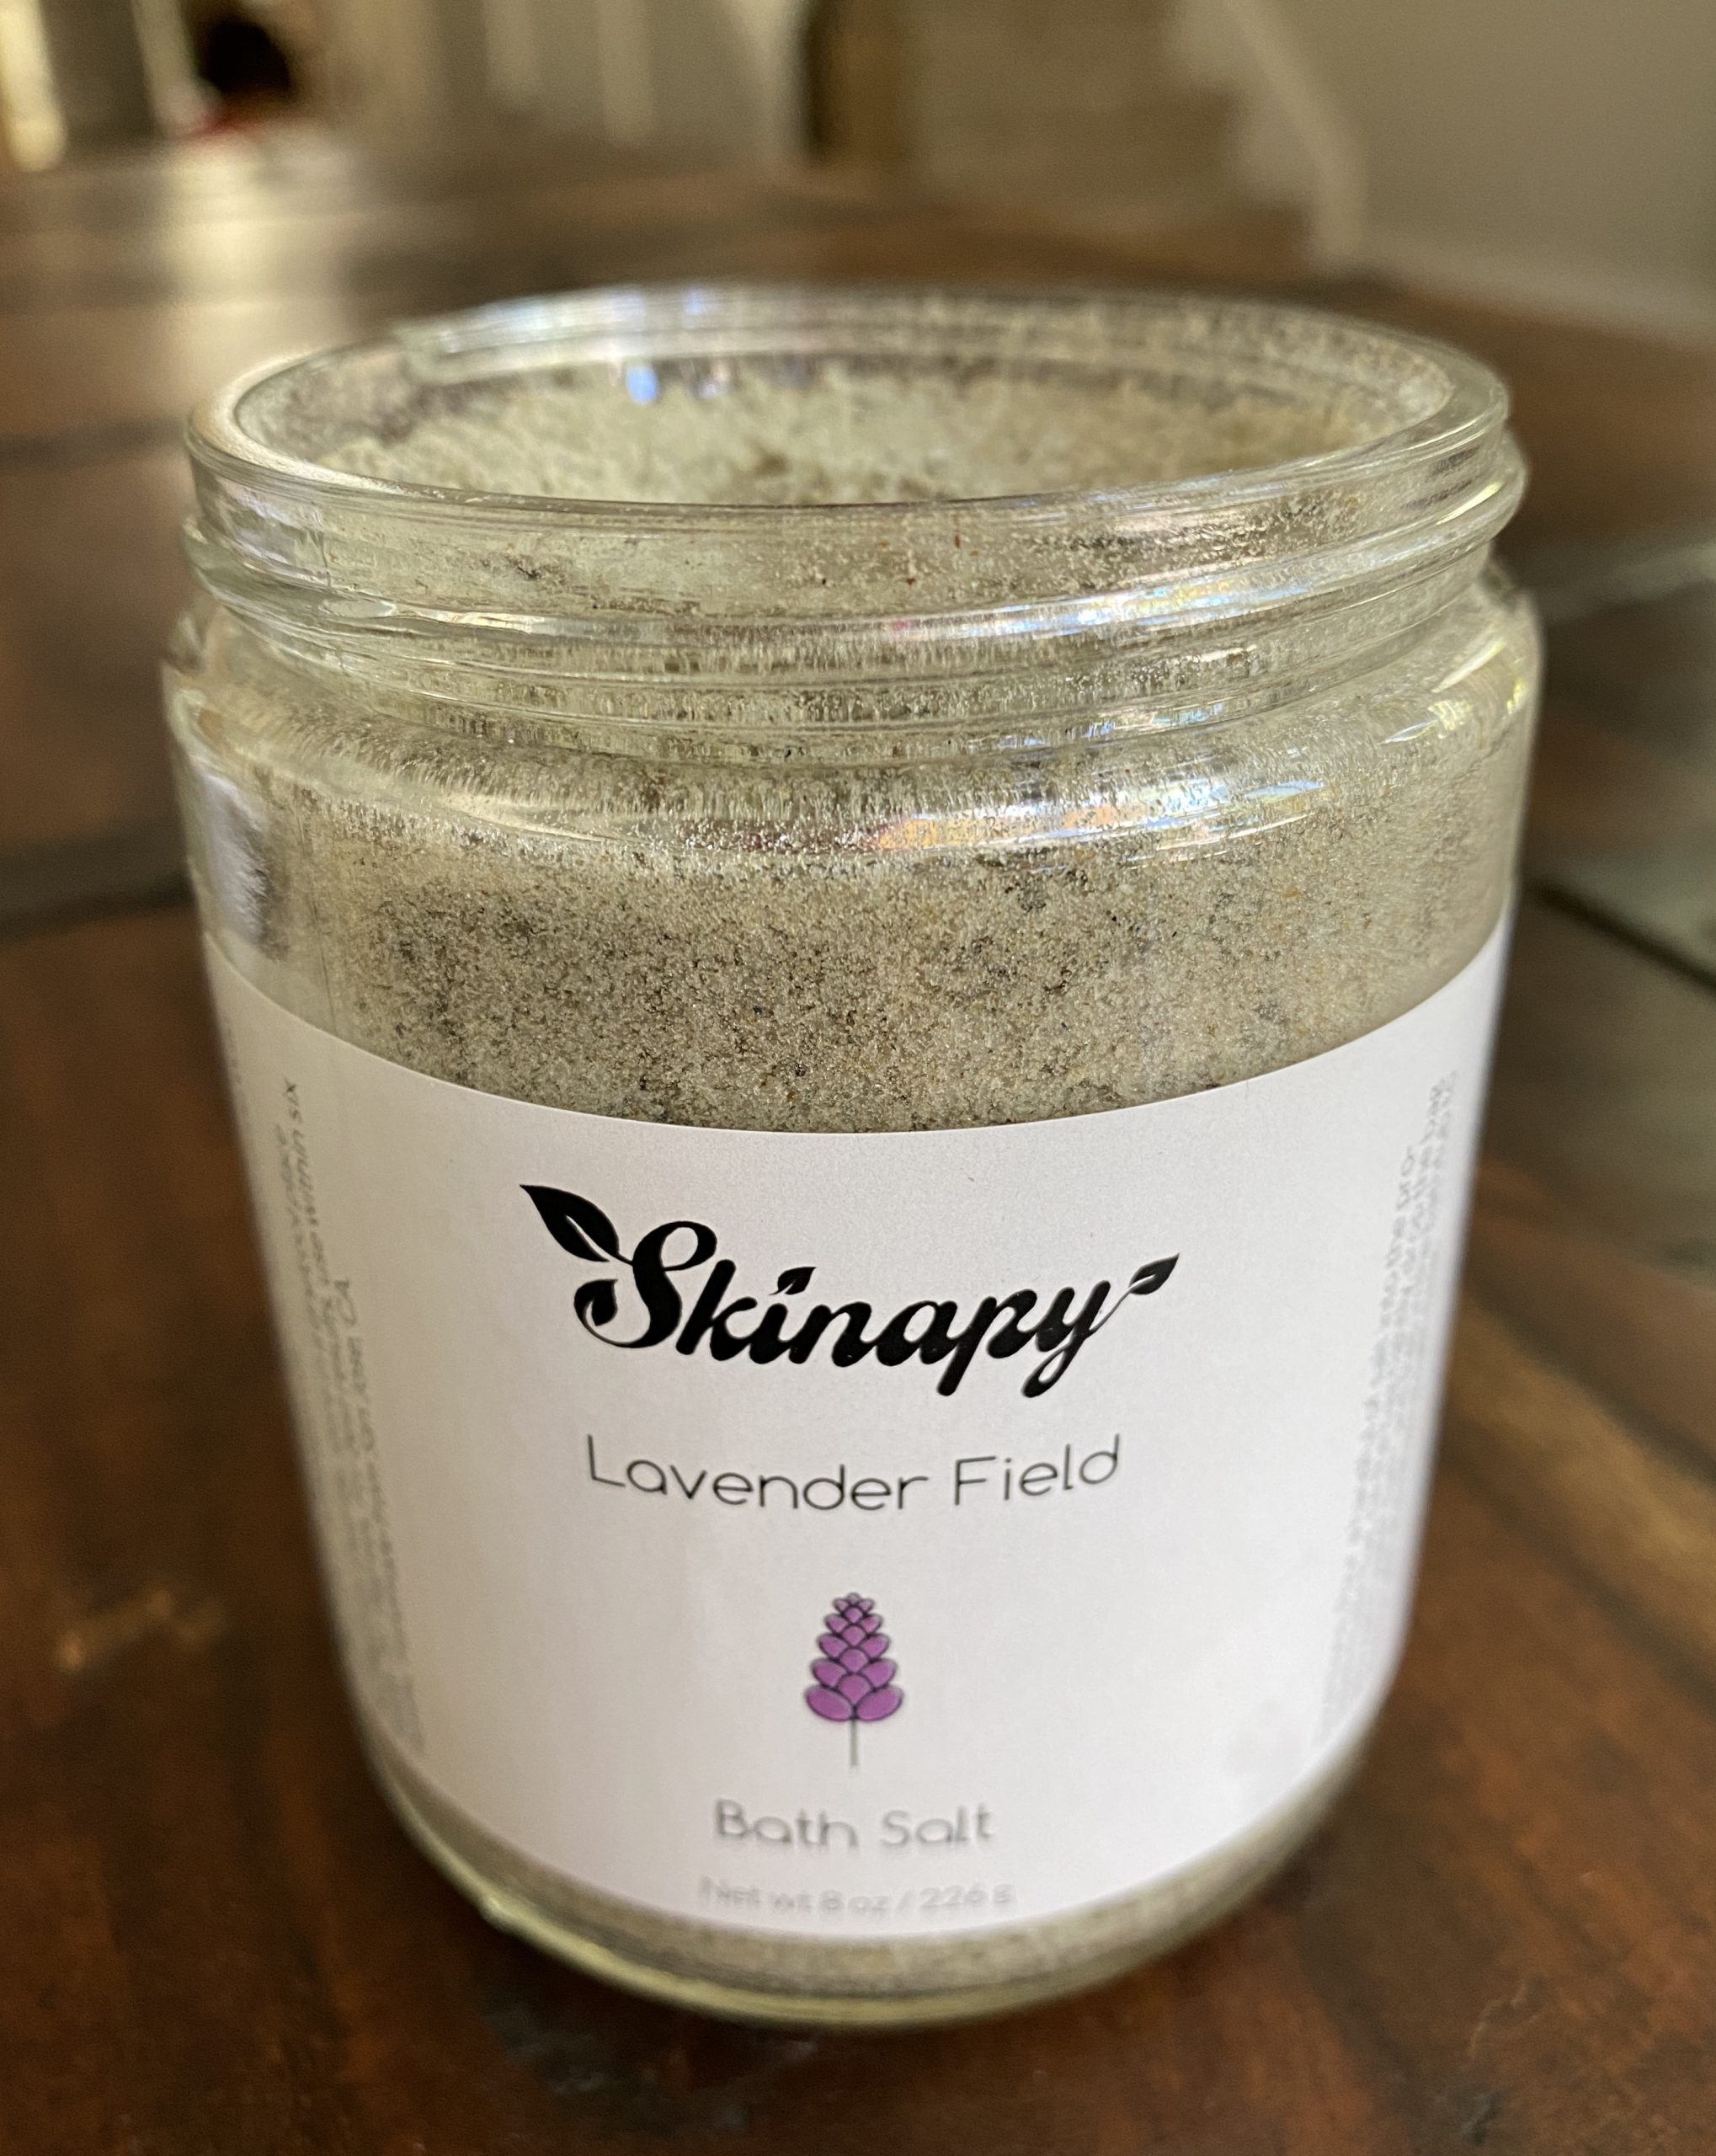 Skinapy Lavender Field Bath salts